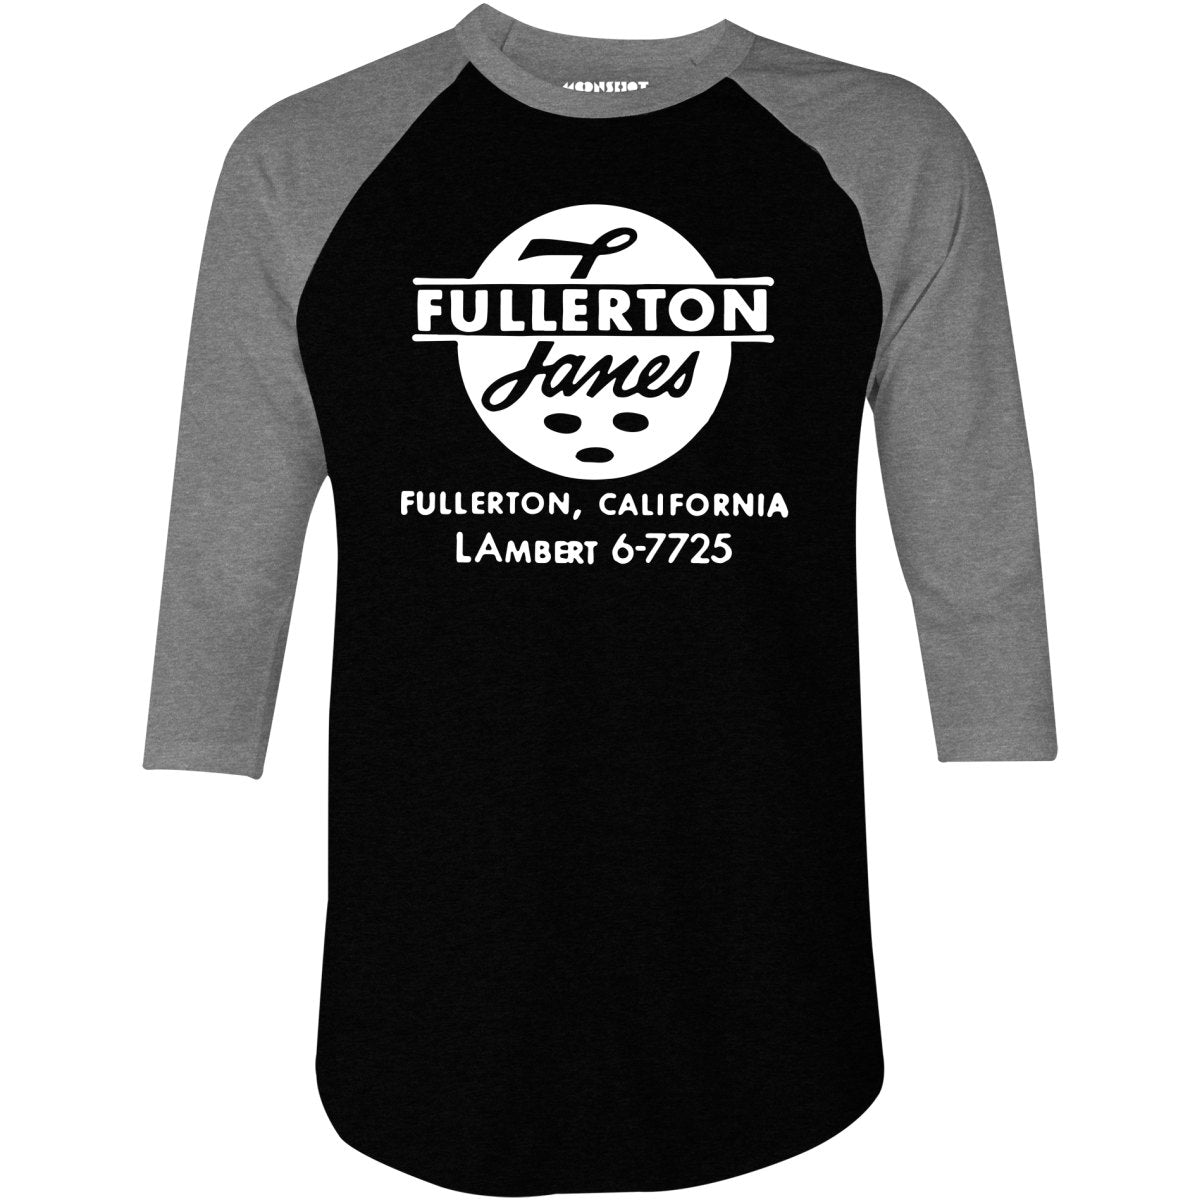 Fullerton Lanes - Fullerton, CA - Vintage Bowling Alley - 3/4 Sleeve Raglan T-Shirt